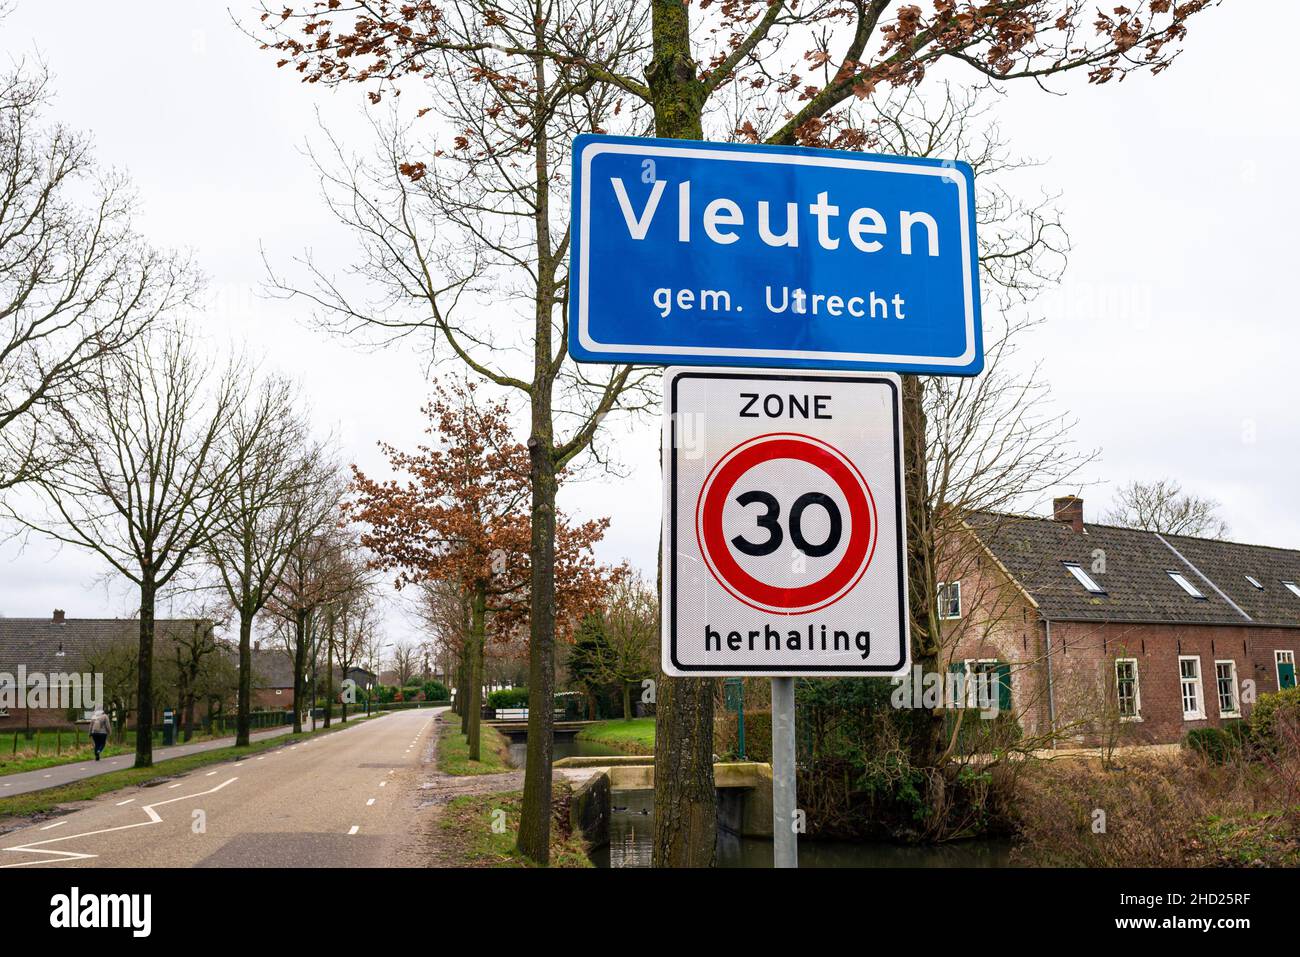 Place name sign of Vleuten, municipality of Utrecht, The Netherlands Stock Photo